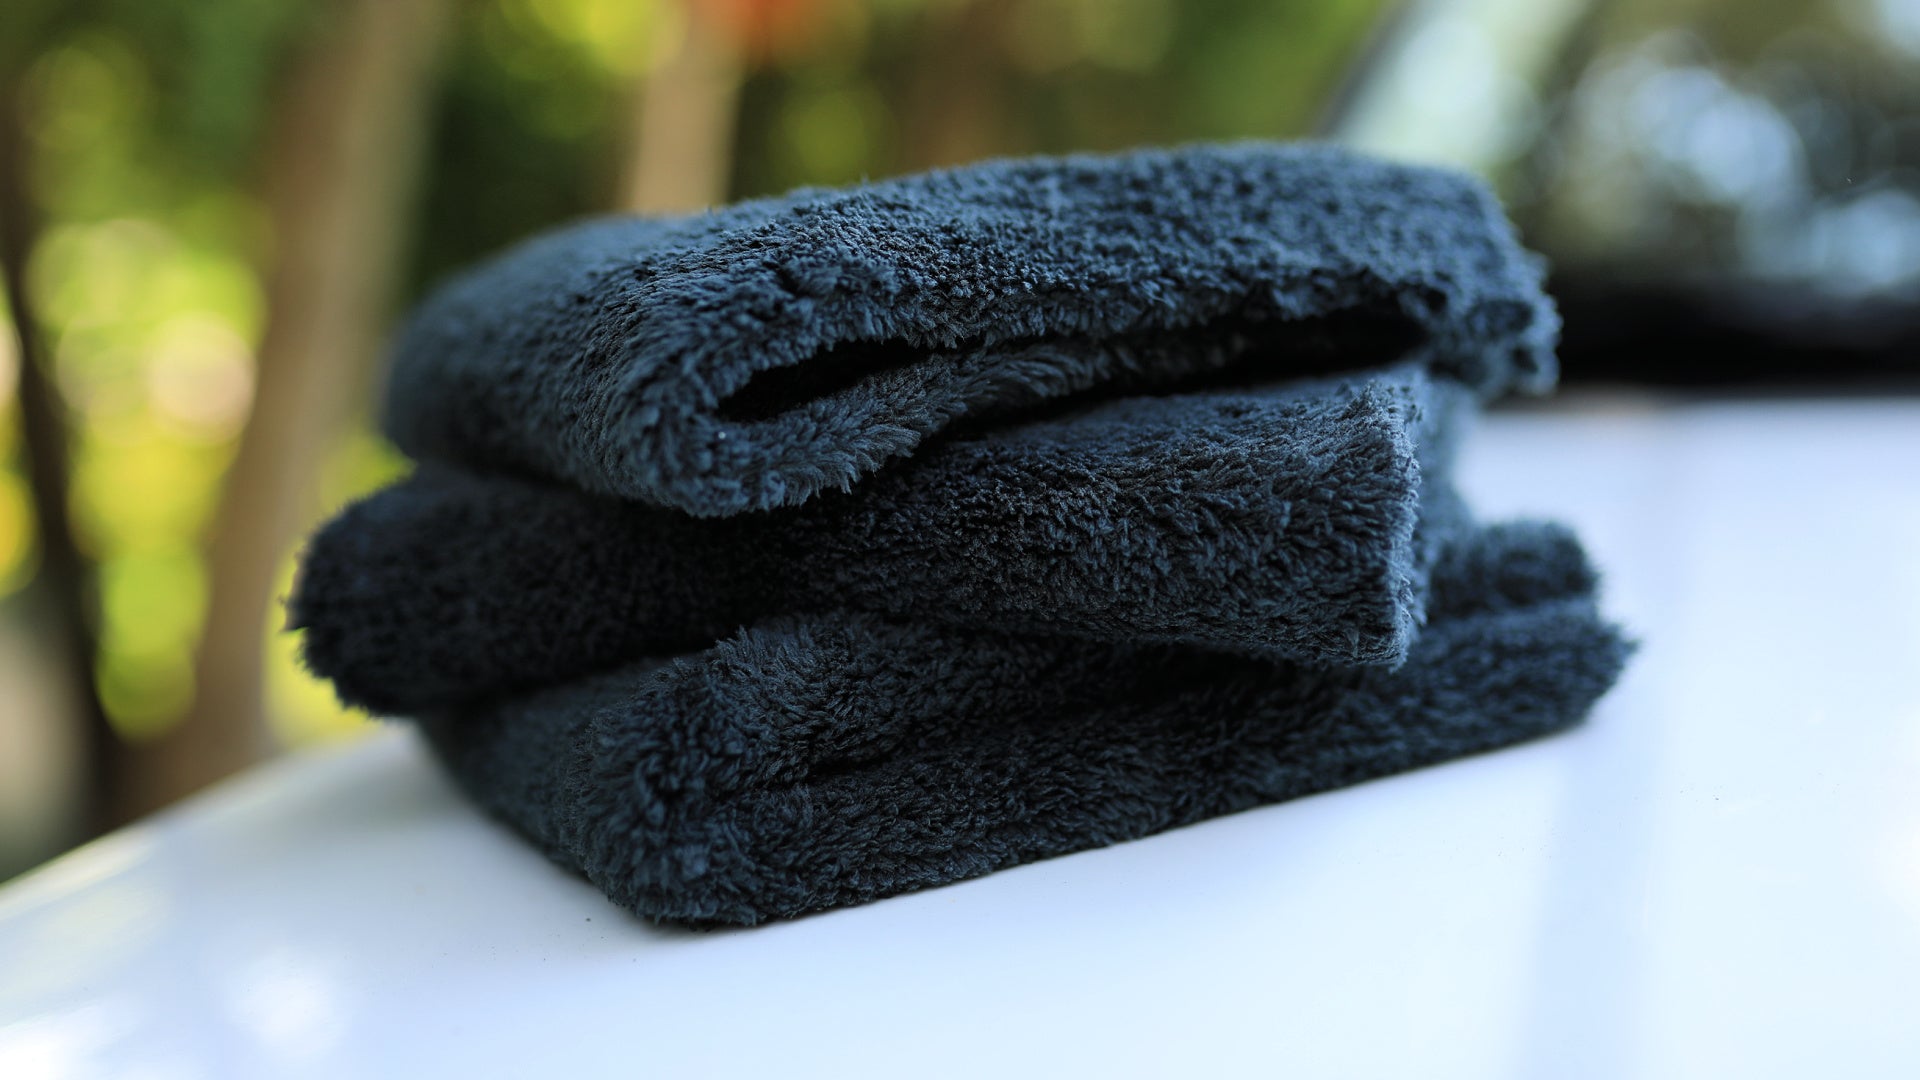 The Nanolex Ultra Drying Towel 